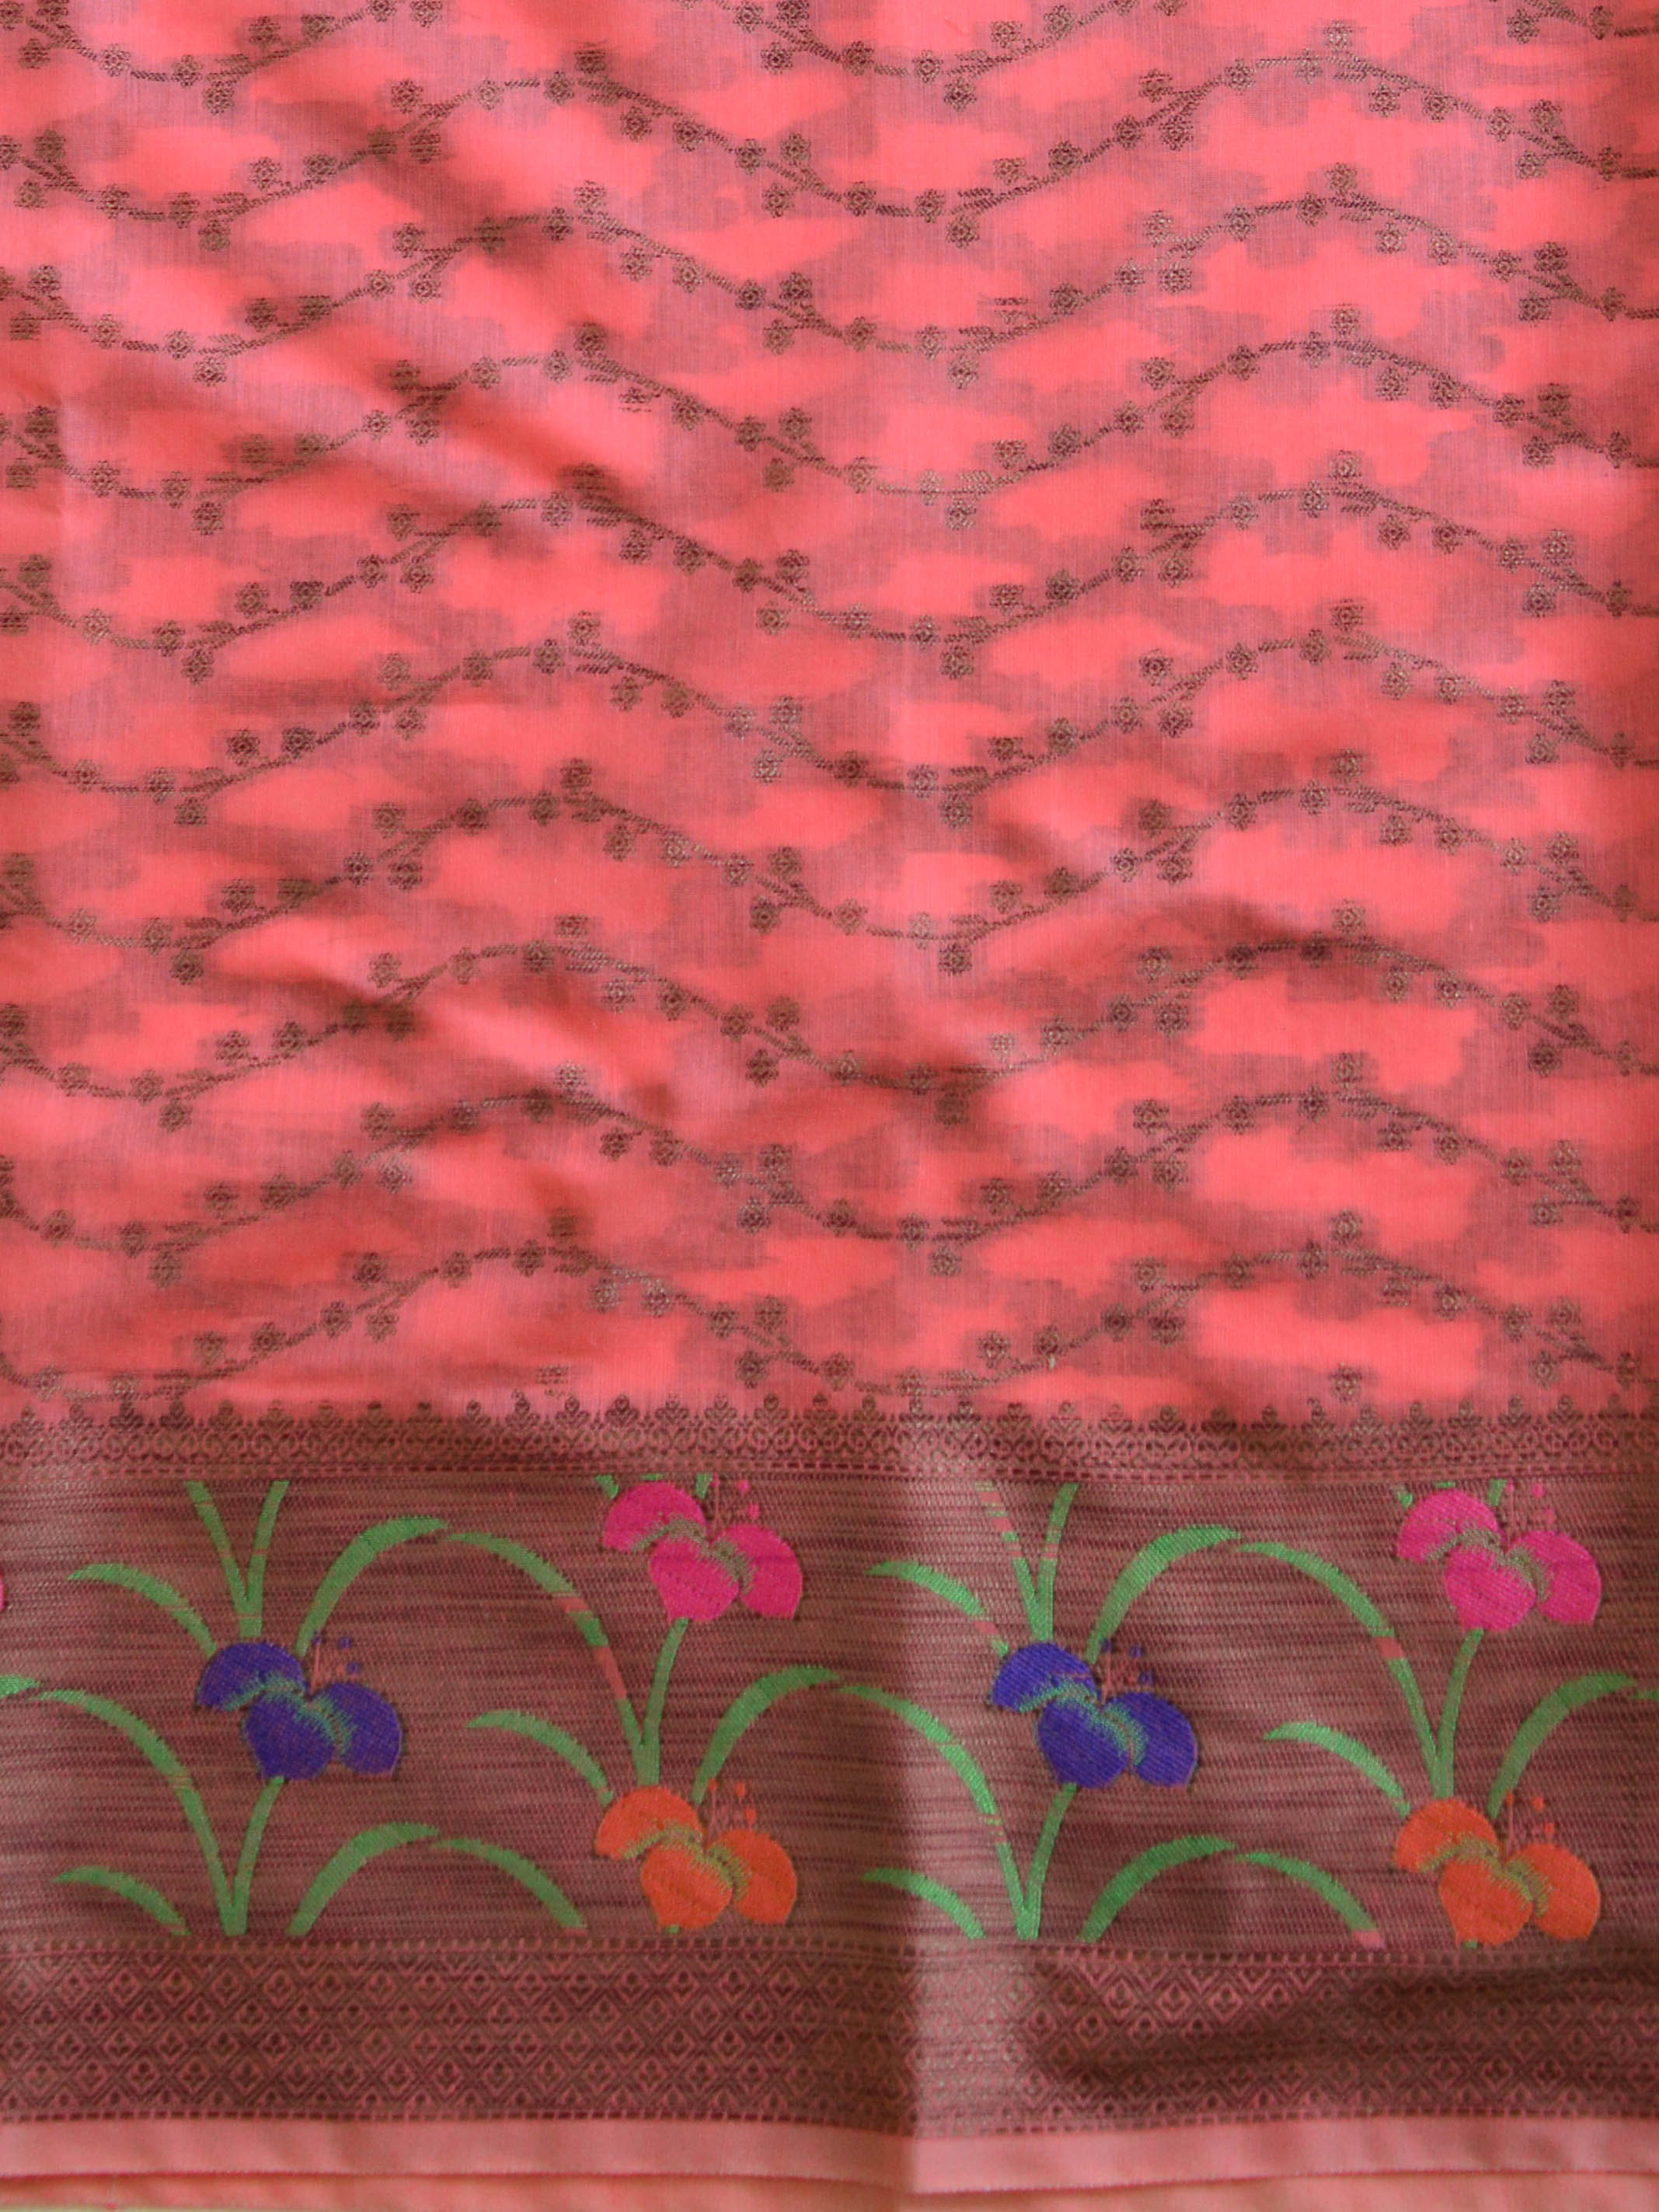 Banarasee Chanderi Cotton Salwar Kameez Fabric With Ghiccha Work-Peach